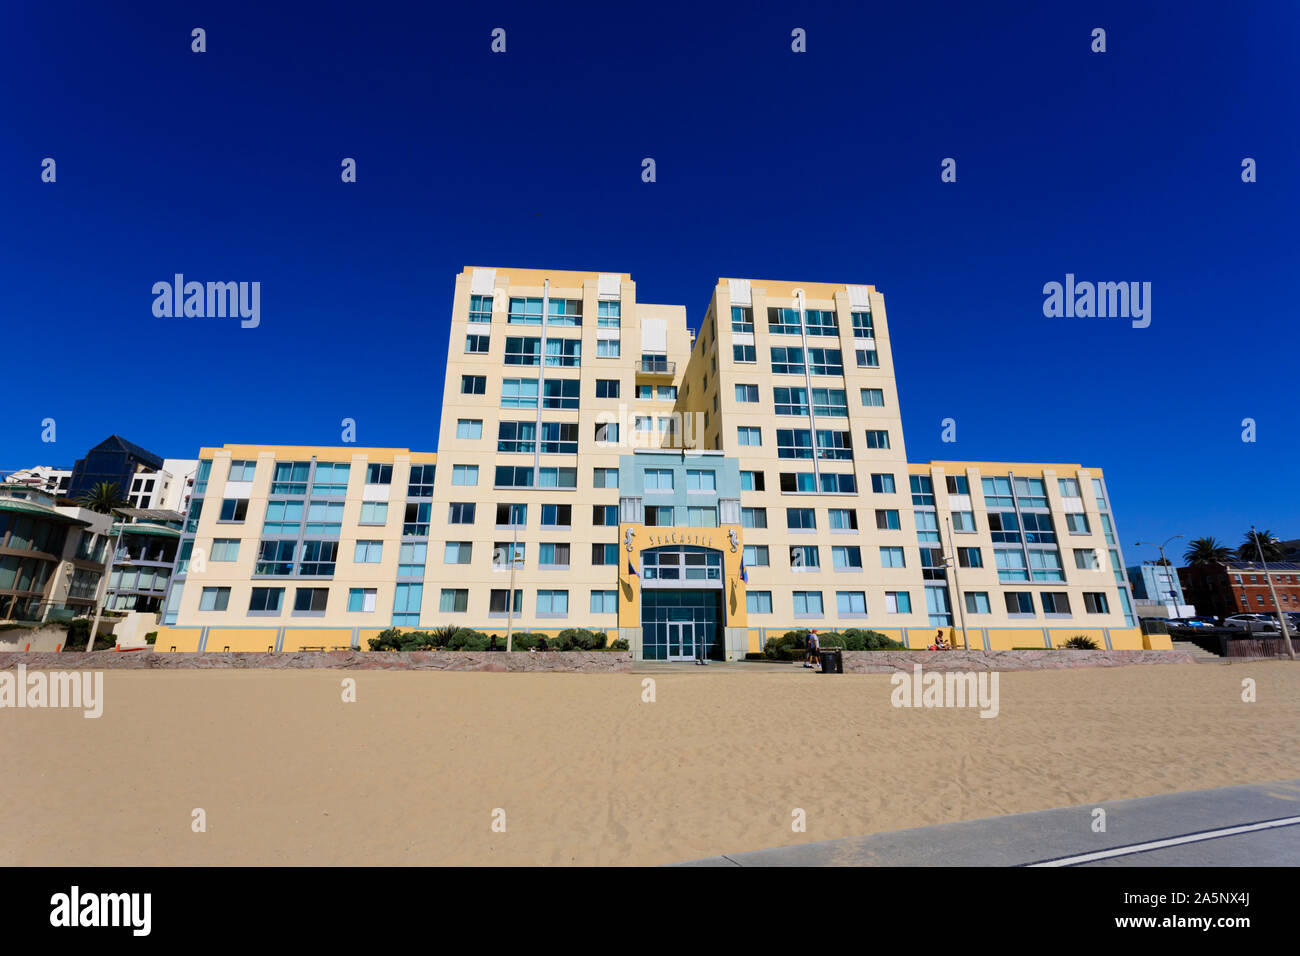 Sea Castle luxury hotel apartments block. 1725 Ocean Front Walk, Santa Monica, California, United States of America. USA. October 2019 Stock Photo